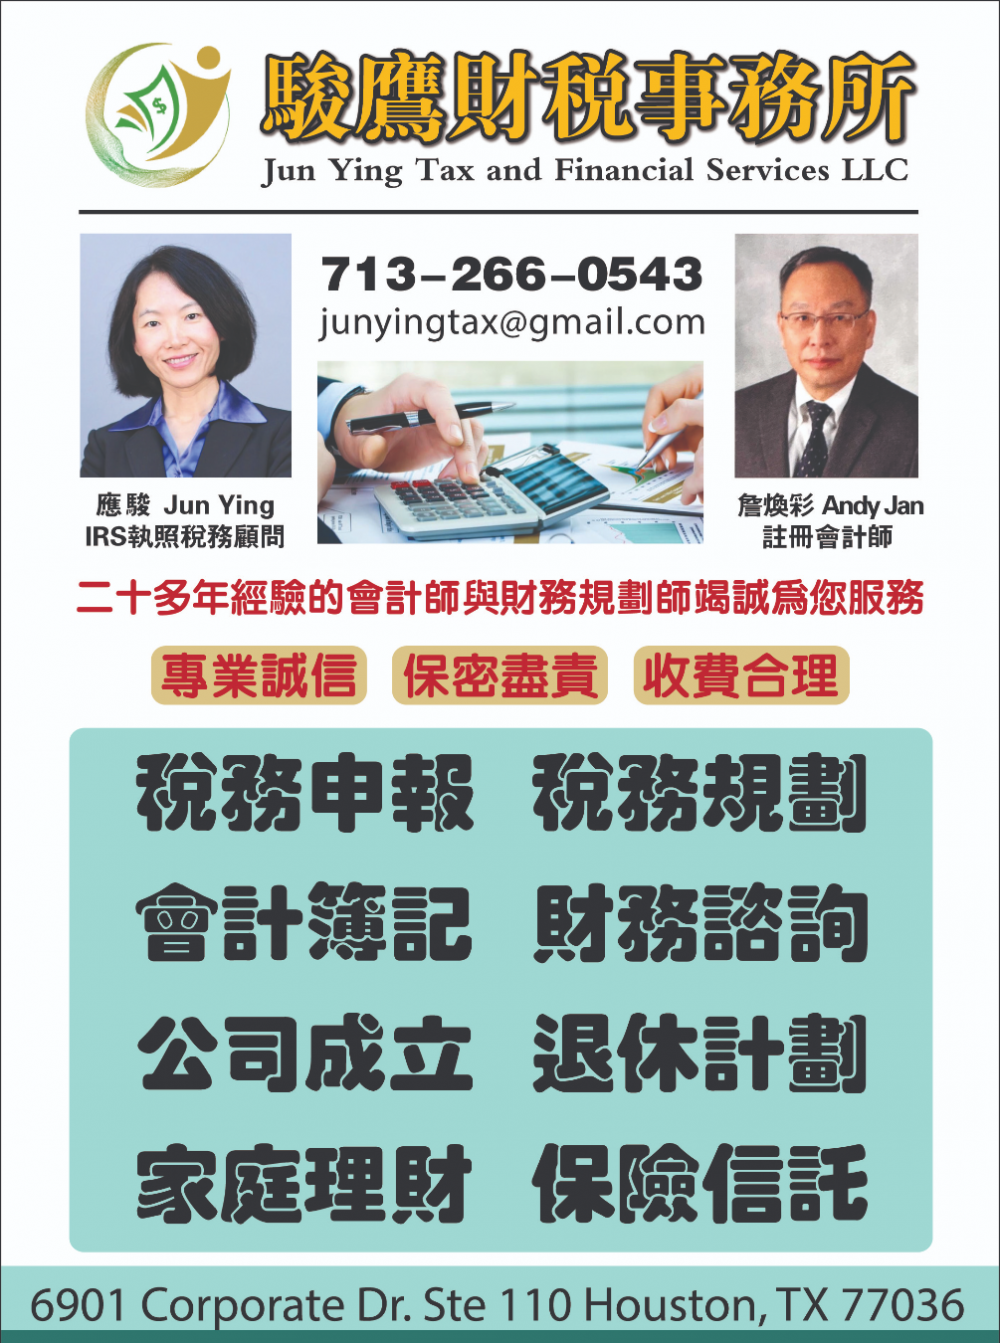 Jun Ying Tax and Financial Services LLC駿鷹財稅事務所